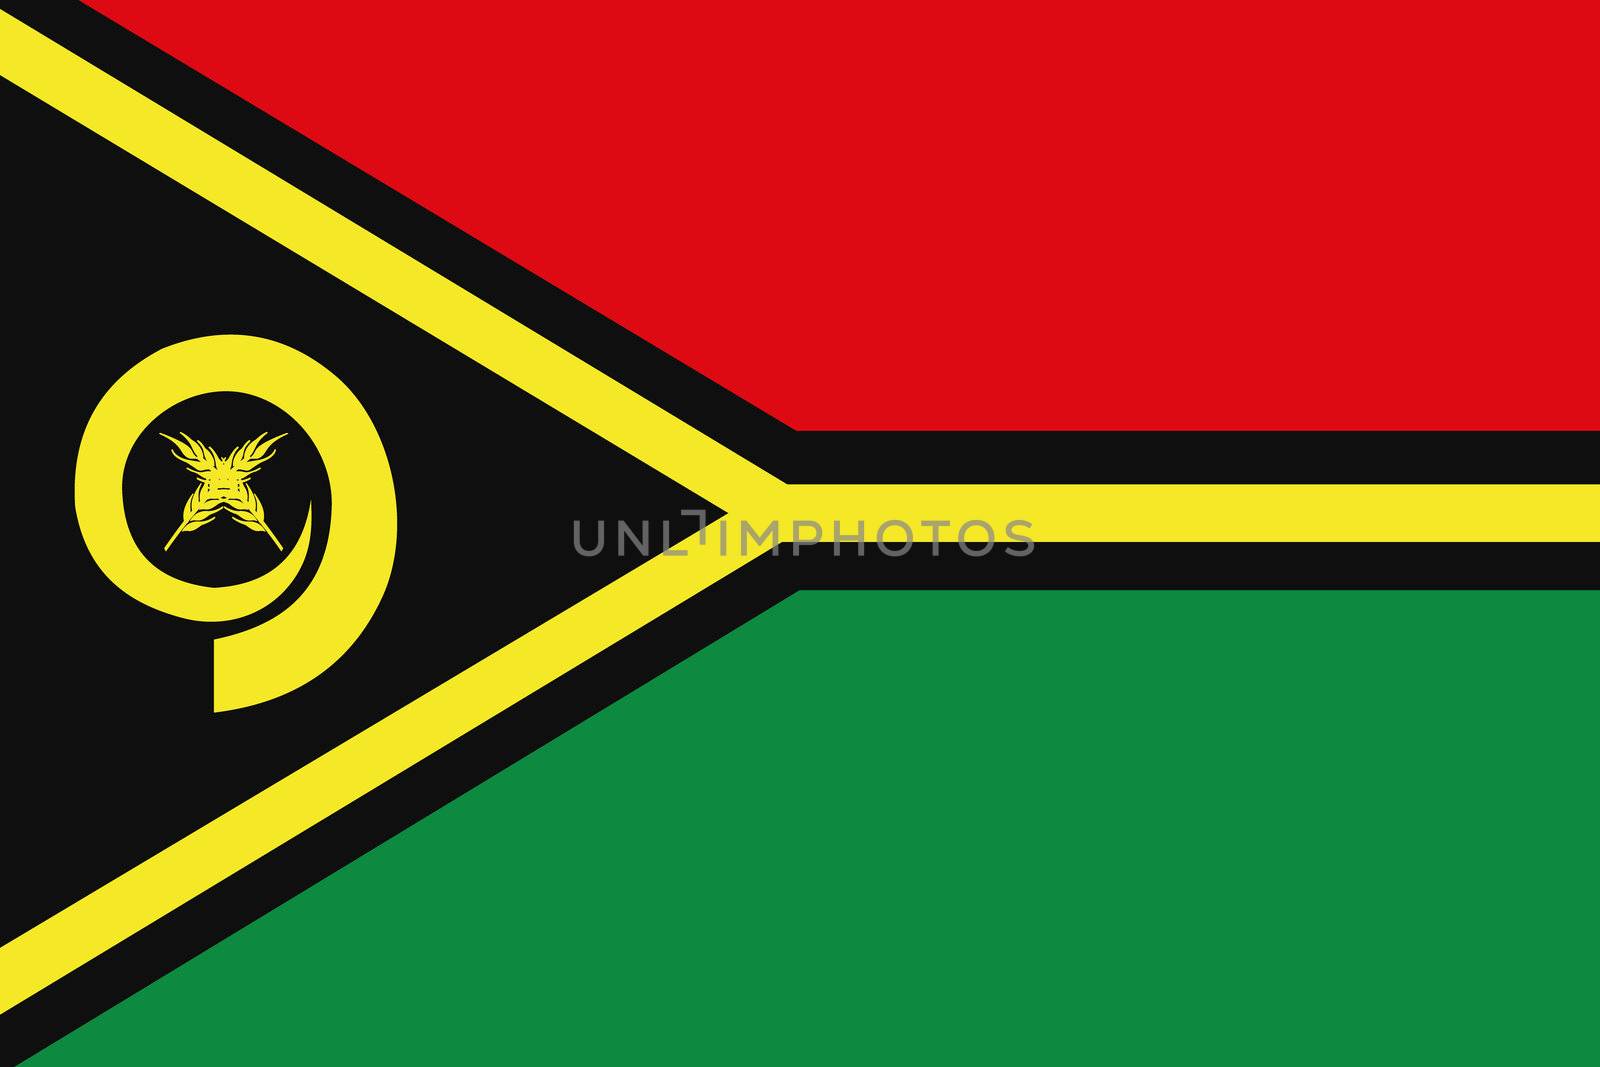 An illustration of the flag of Vanuatu